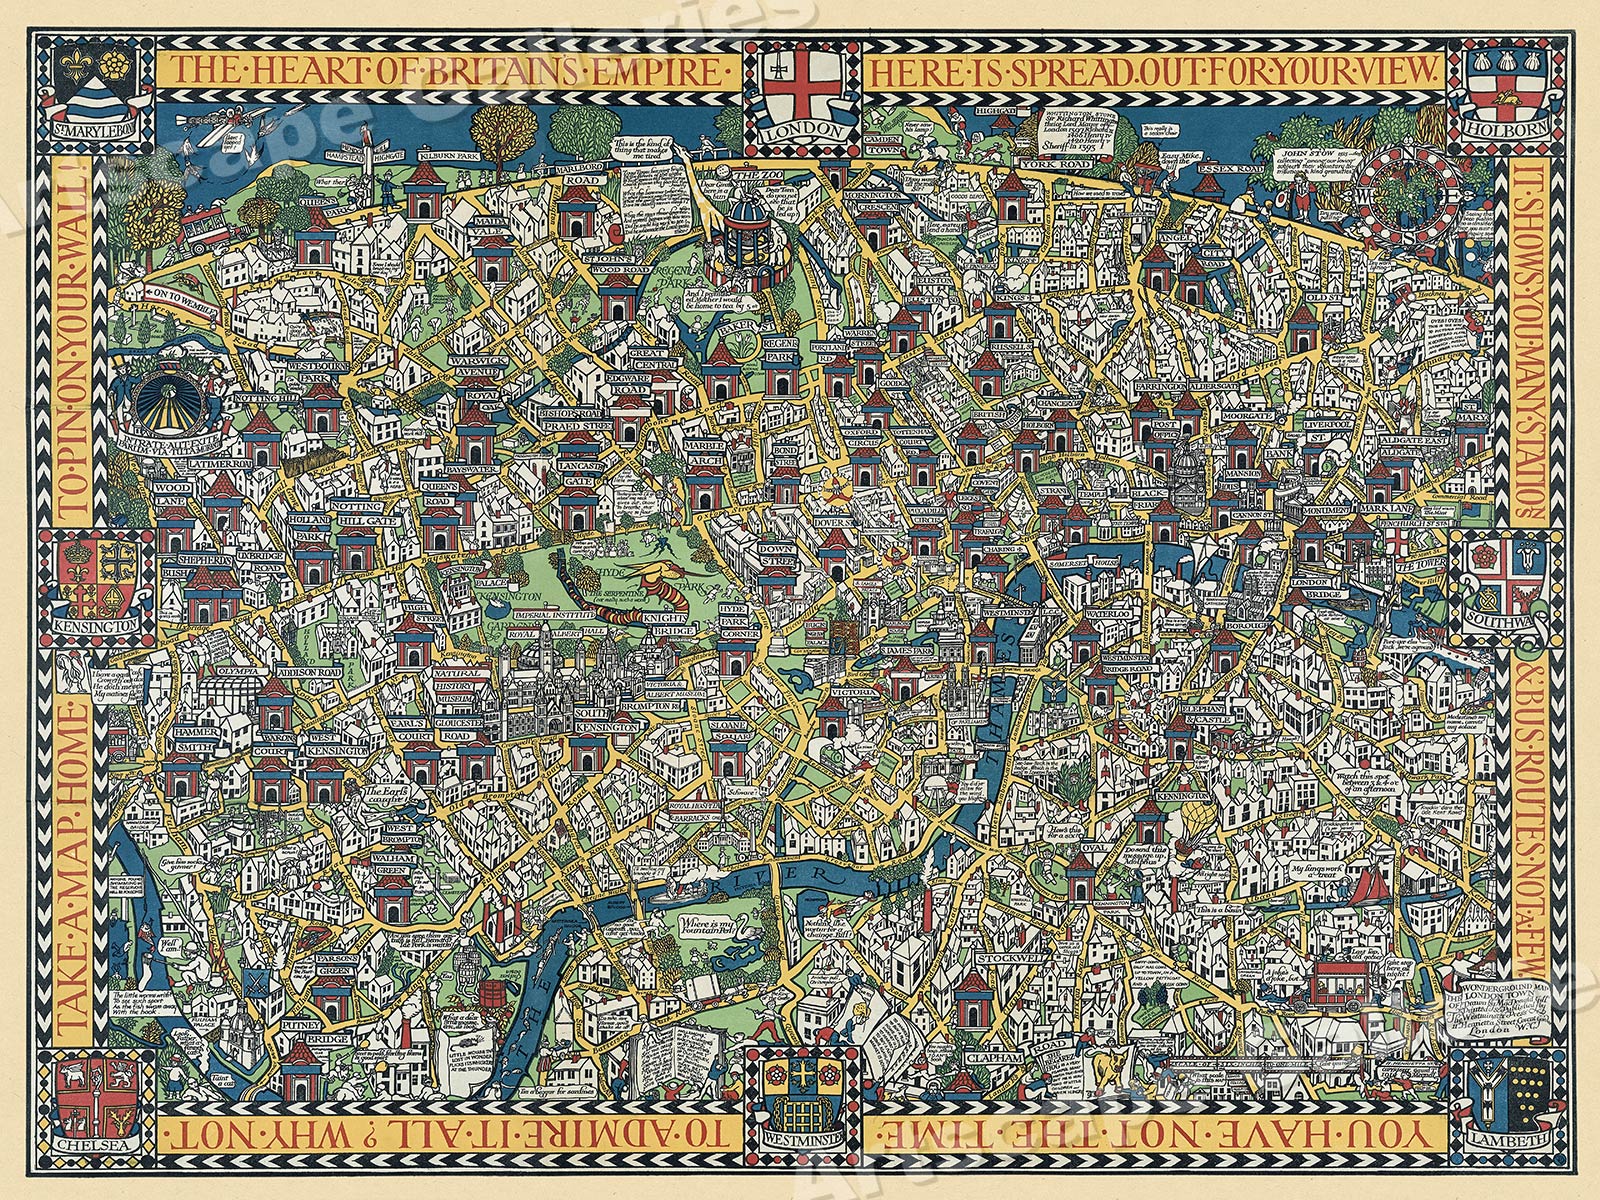 1920s “London Wonderground” Vintage Style London Street Map - 24x32 | eBay